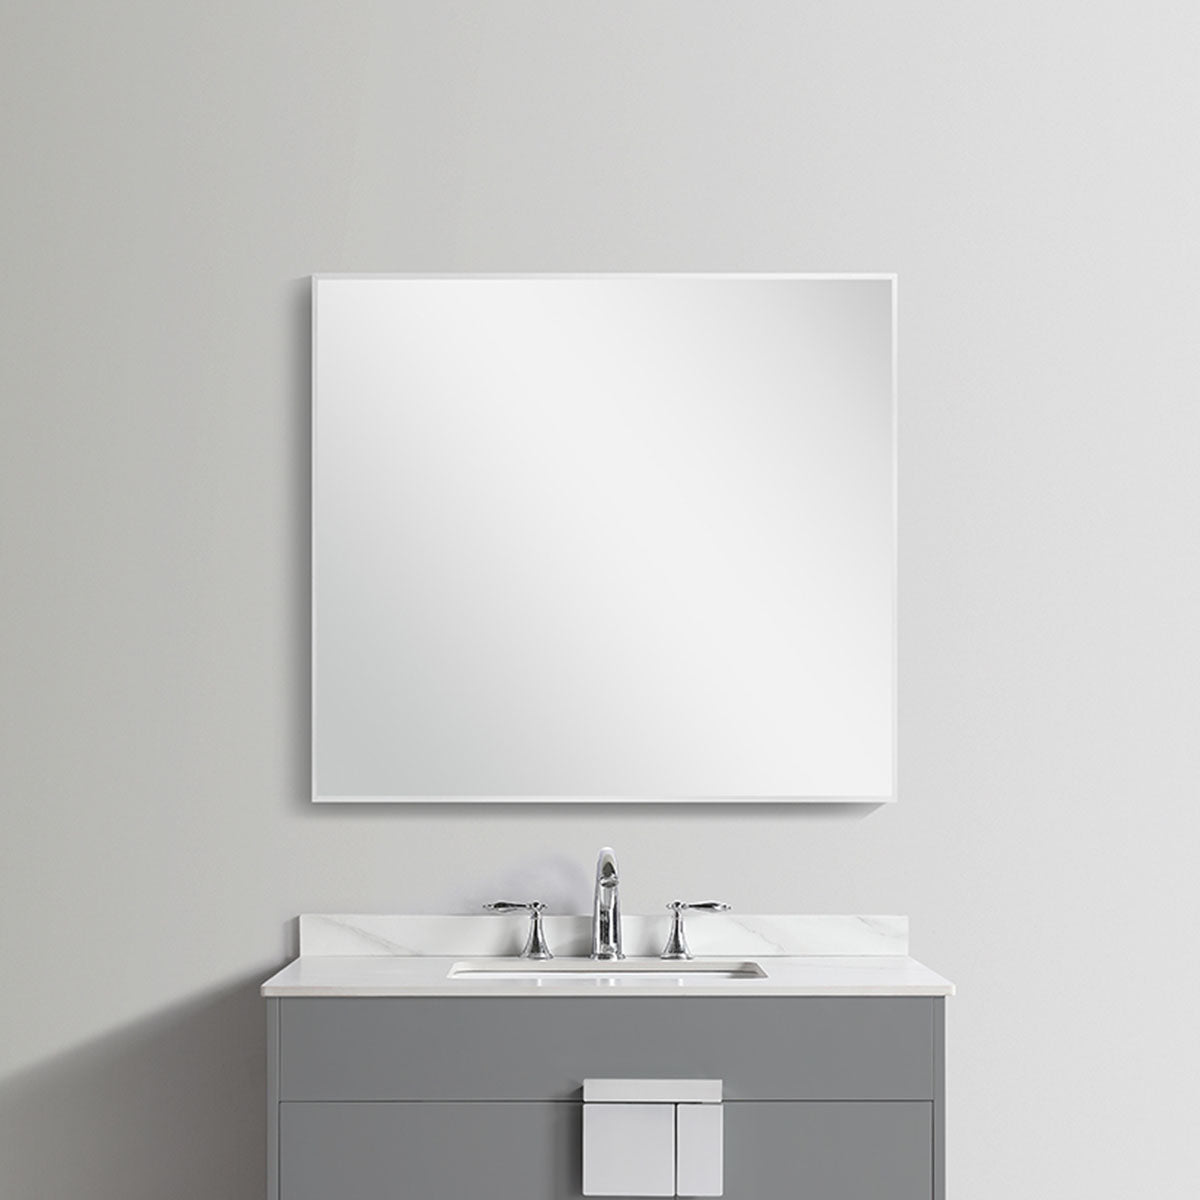 36"w x 32"h Aluminum Rectangle Bathroom Wall Mirror (Silver) - iStyle Bath